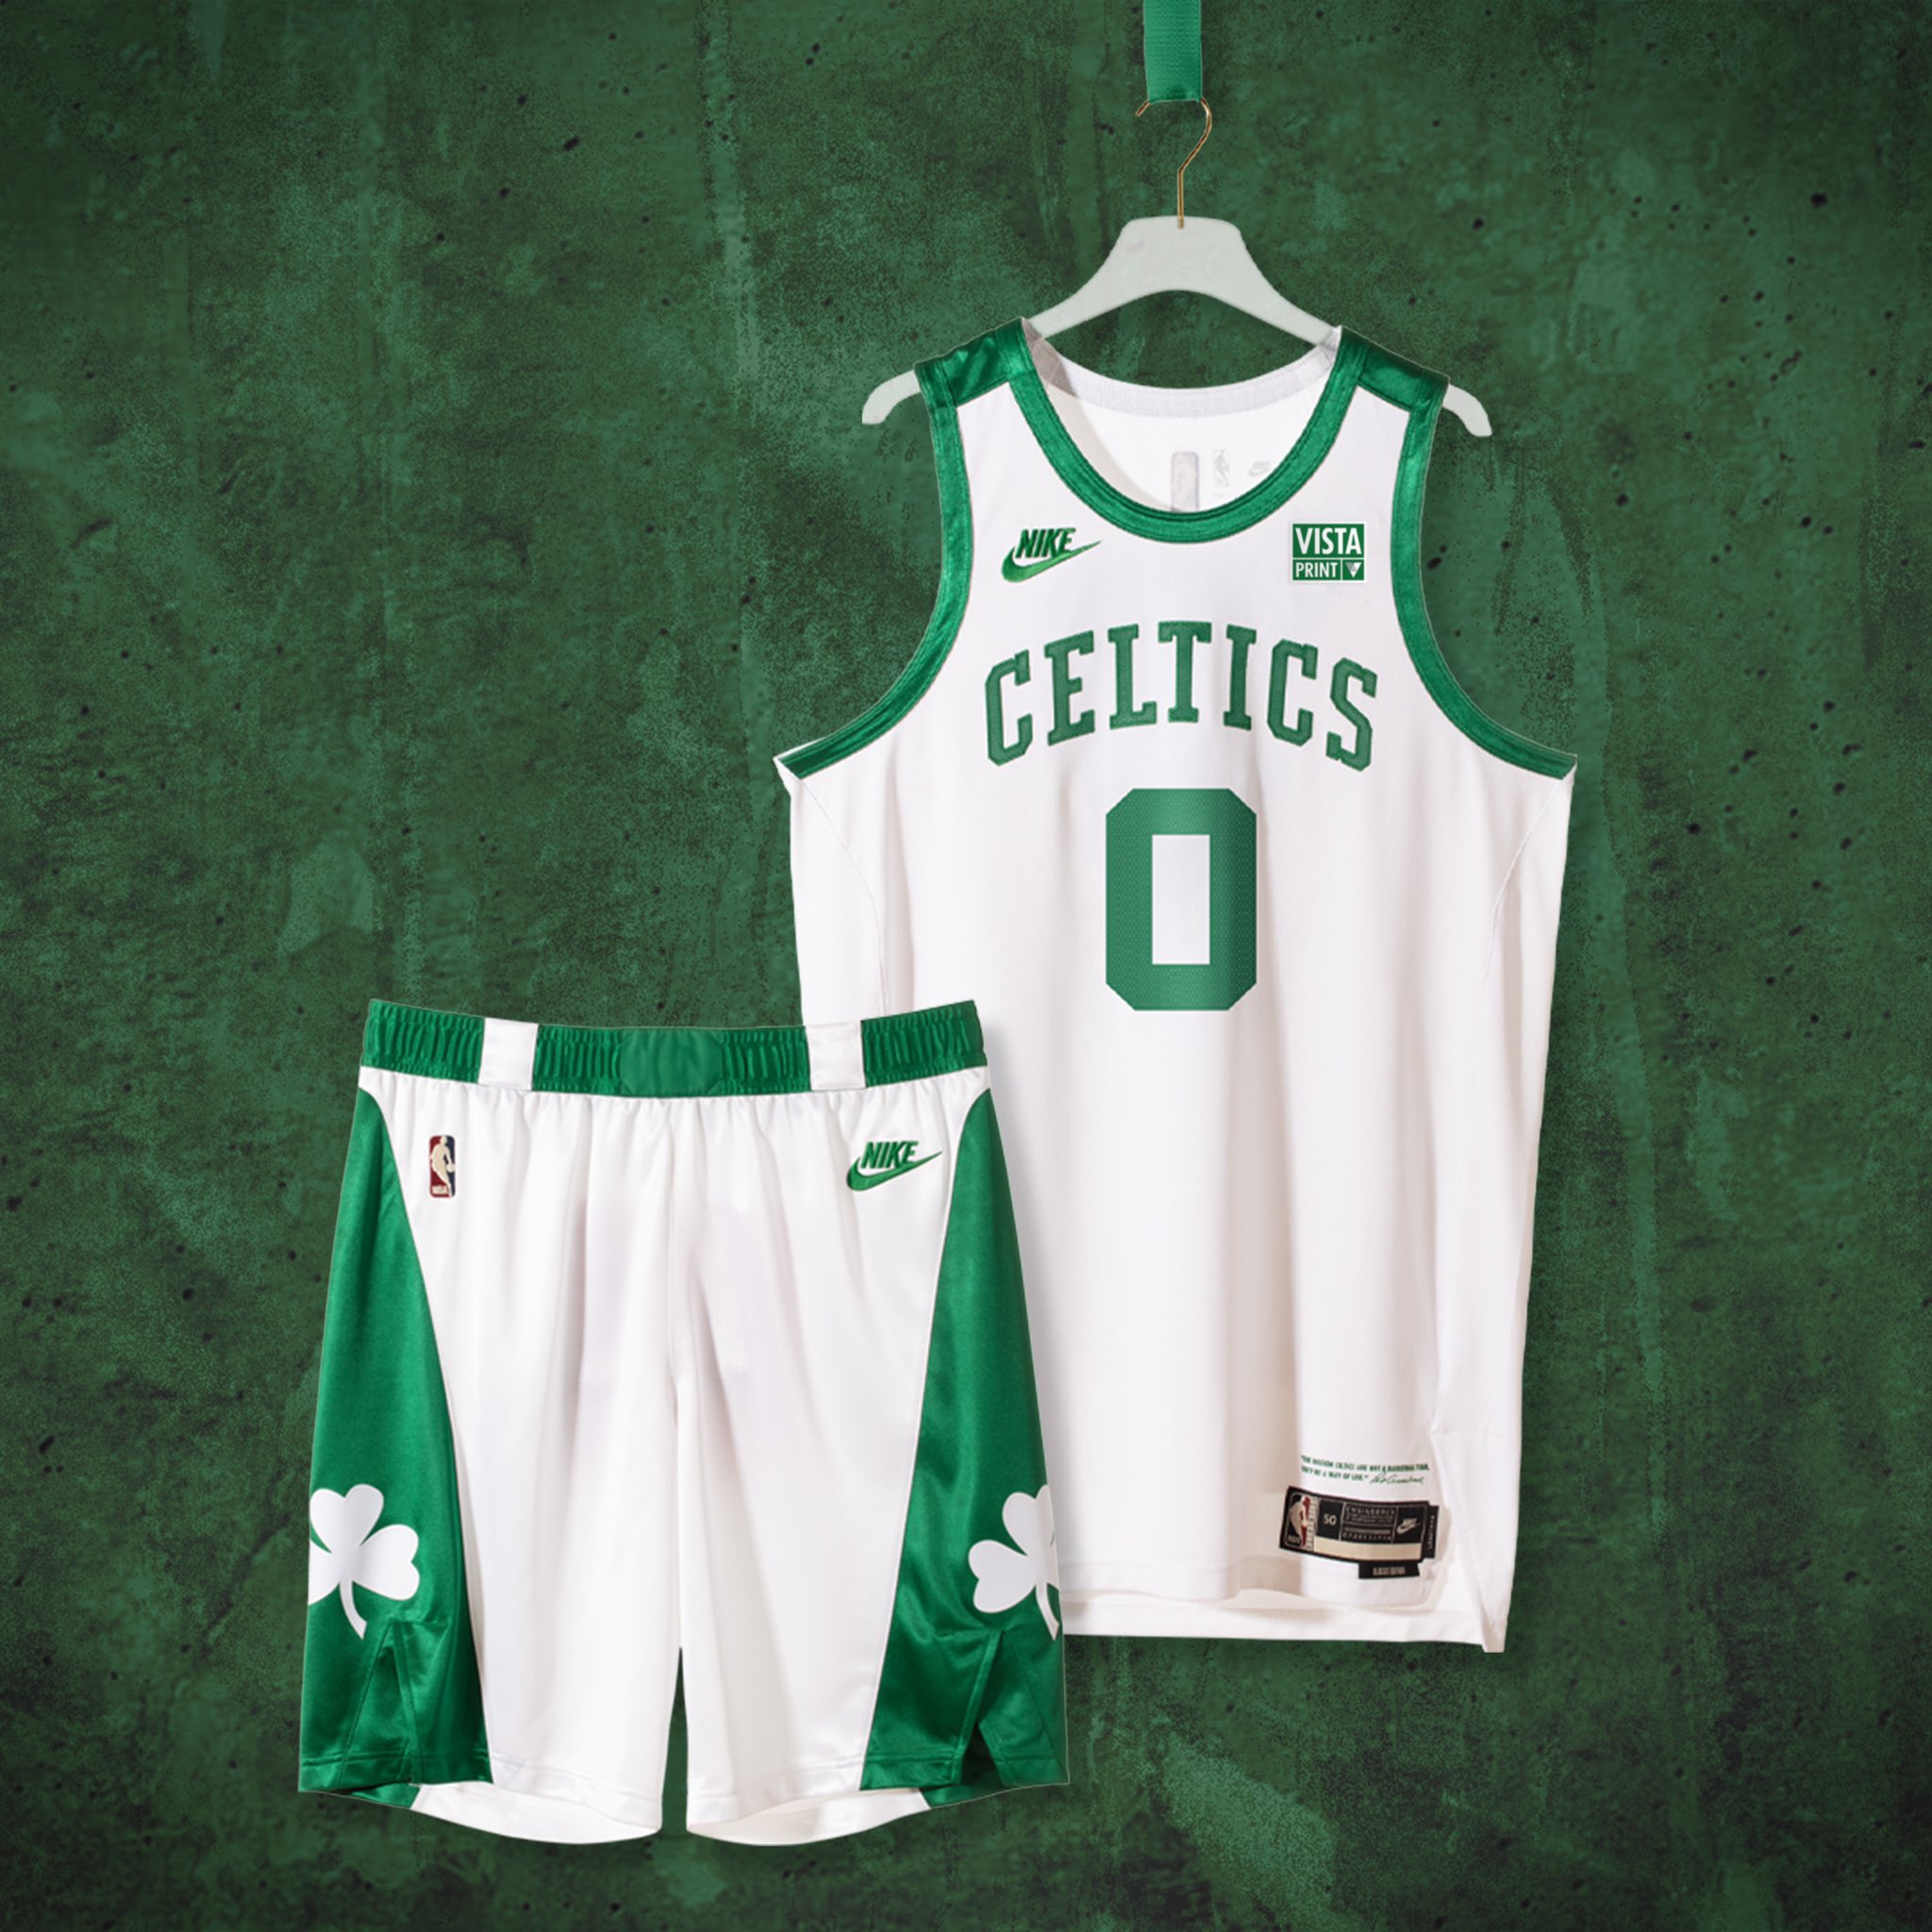 Boston Celtics 75th anniversary Jersey.